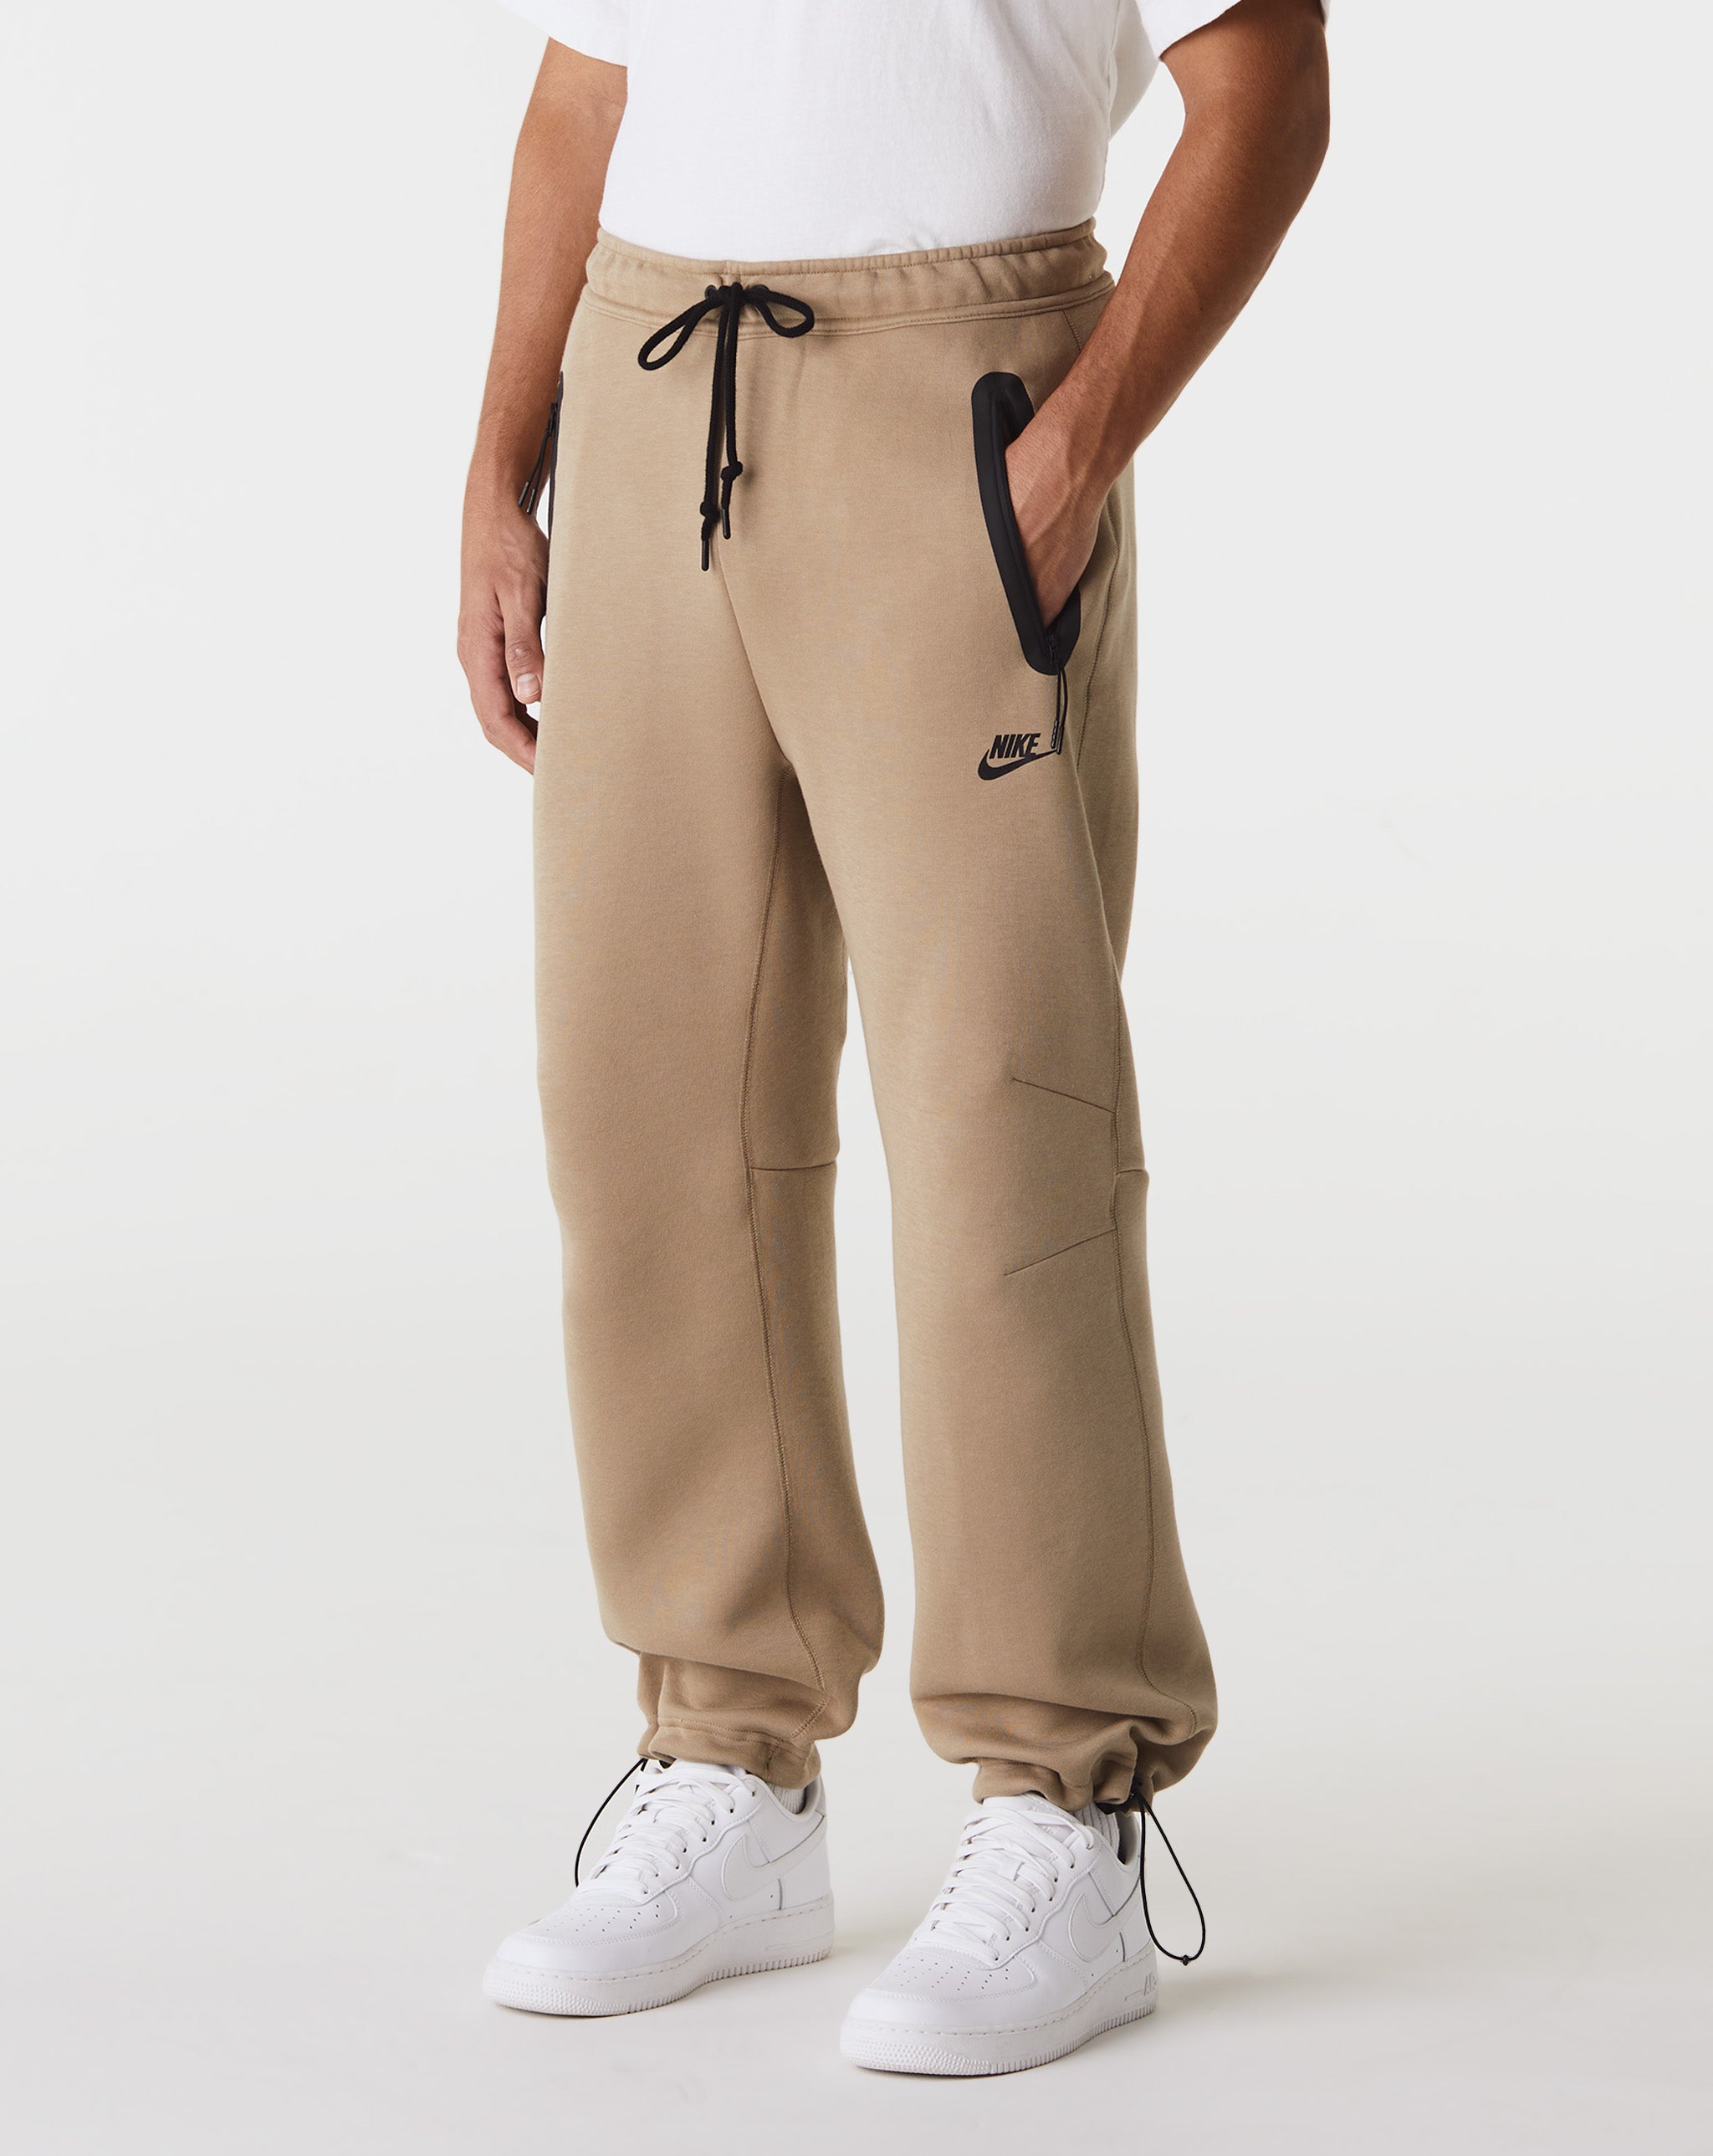 Nike piece Baby Toddler Boy Striped Letter Vest and Camouflage Shorts Set  - Cheap Erlebniswelt-fliegenfischen Jordan outlet